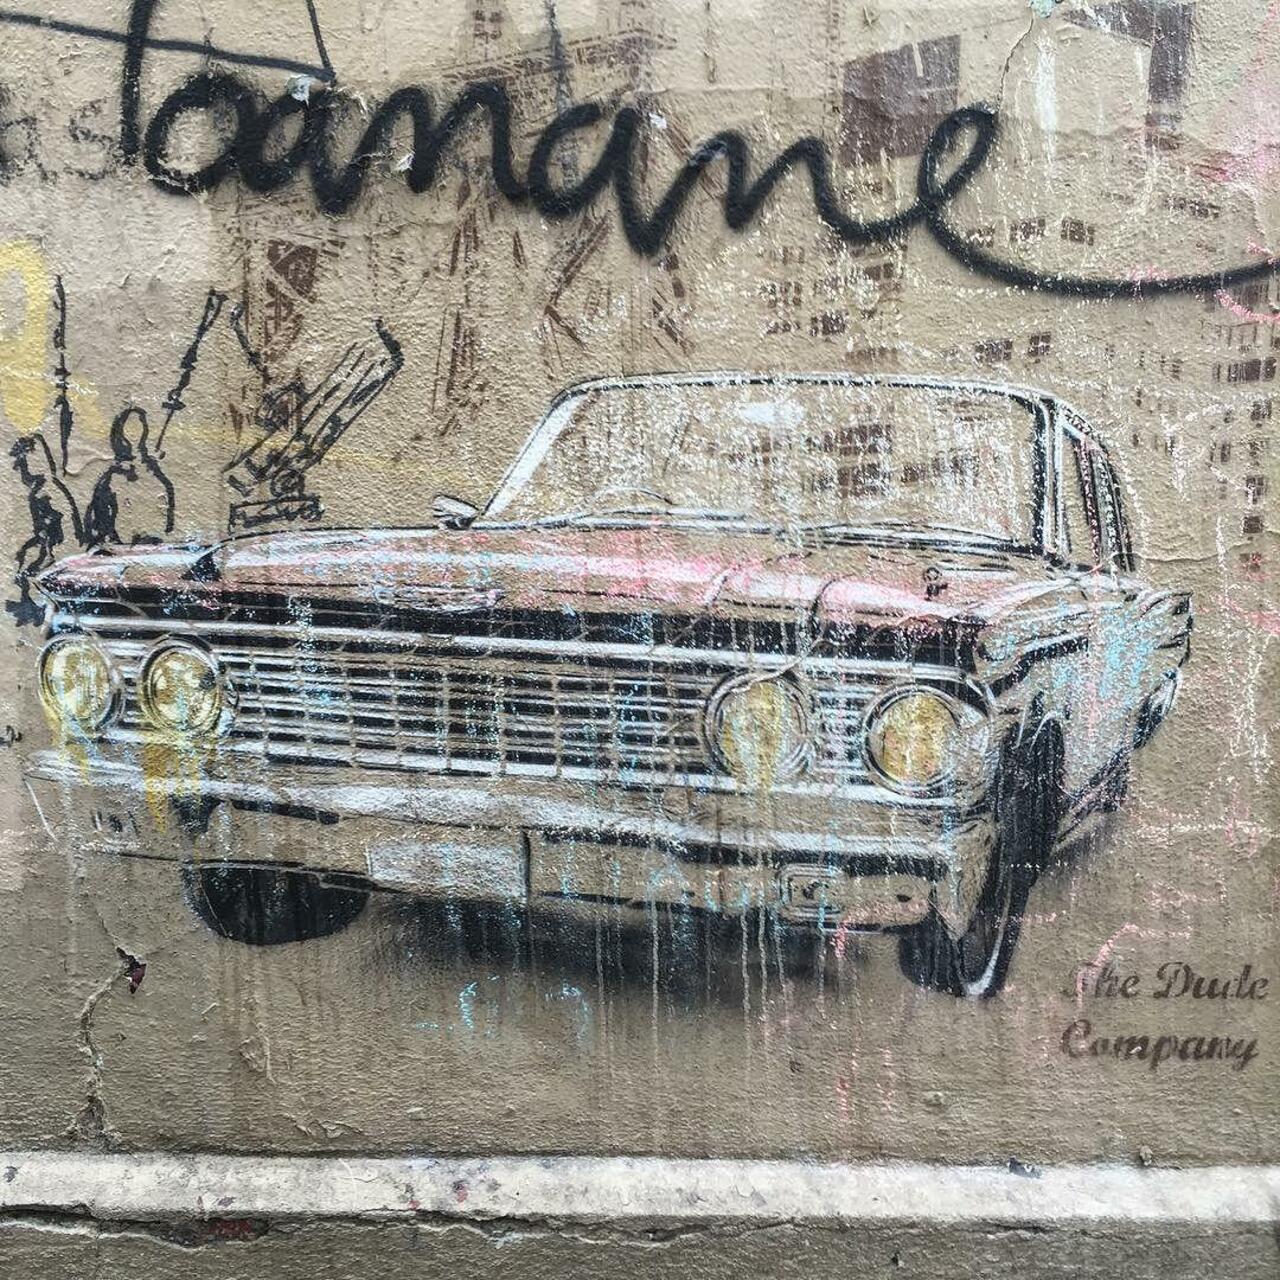 #Paris #graffiti photo by @catscoffeecreativity http://ift.tt/1RJSR0n #StreetArt http://t.co/13lymYFsY9